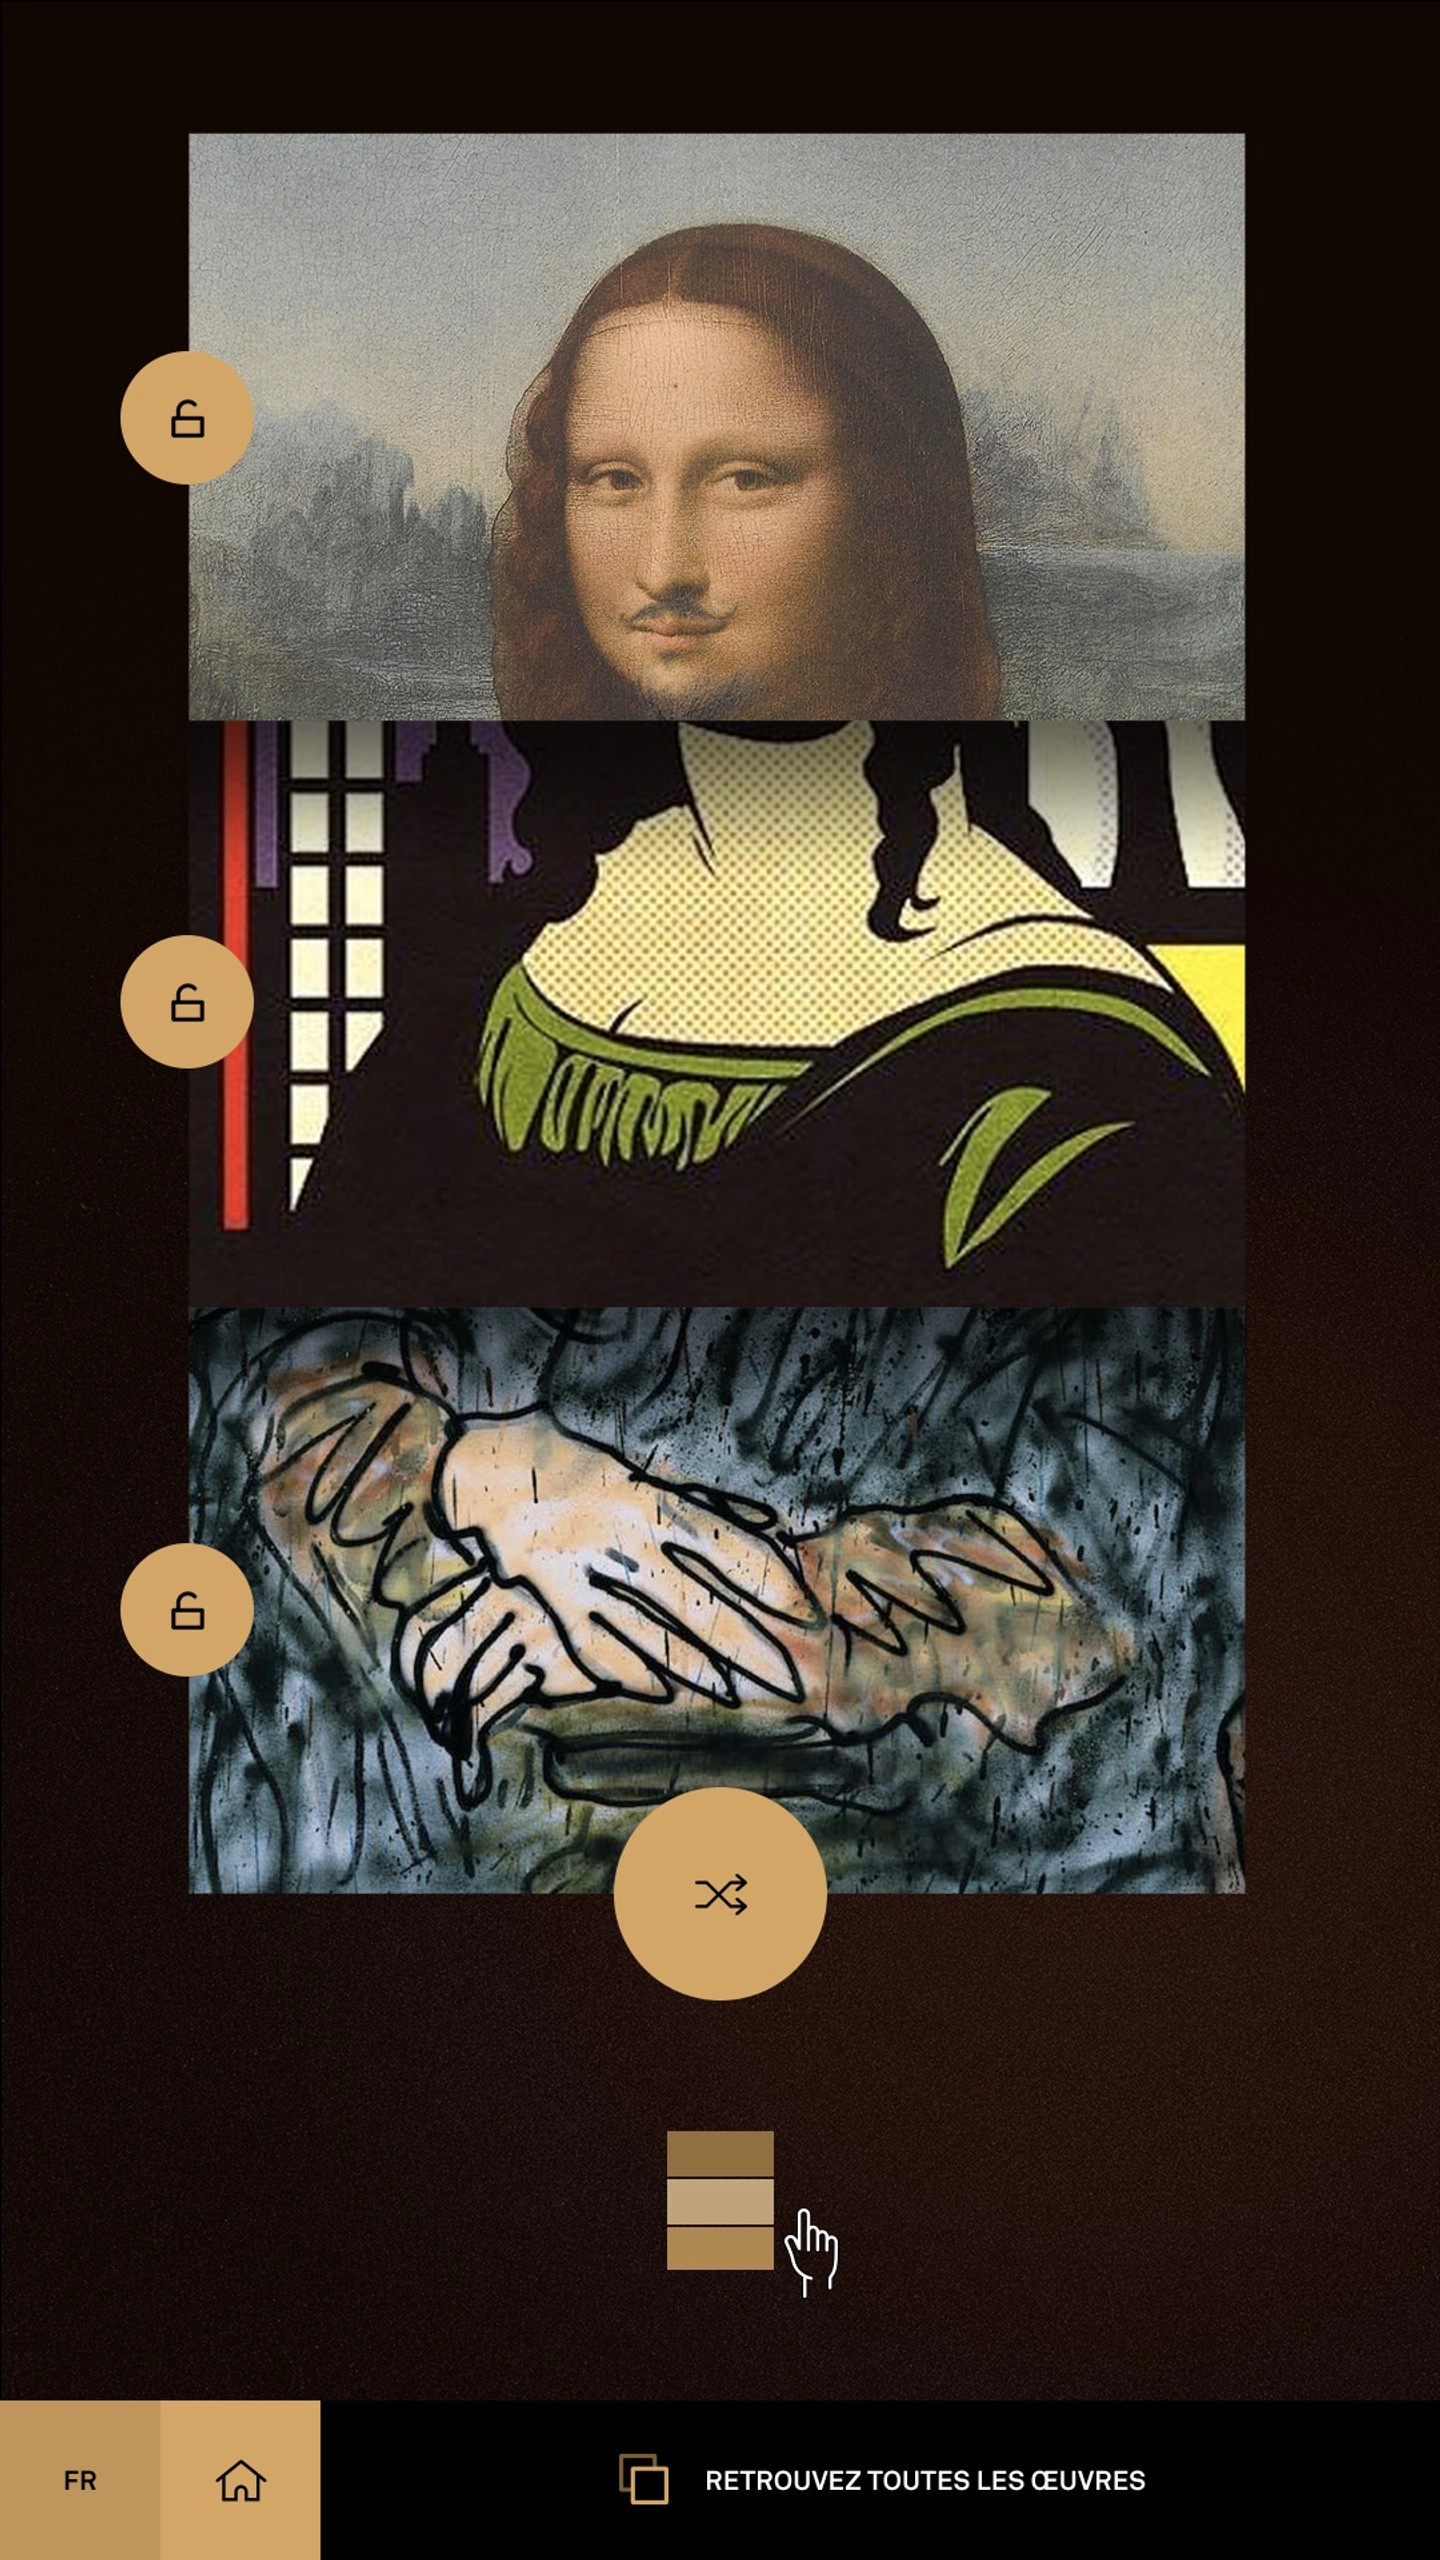 The Mona Lisa, a Pop icon